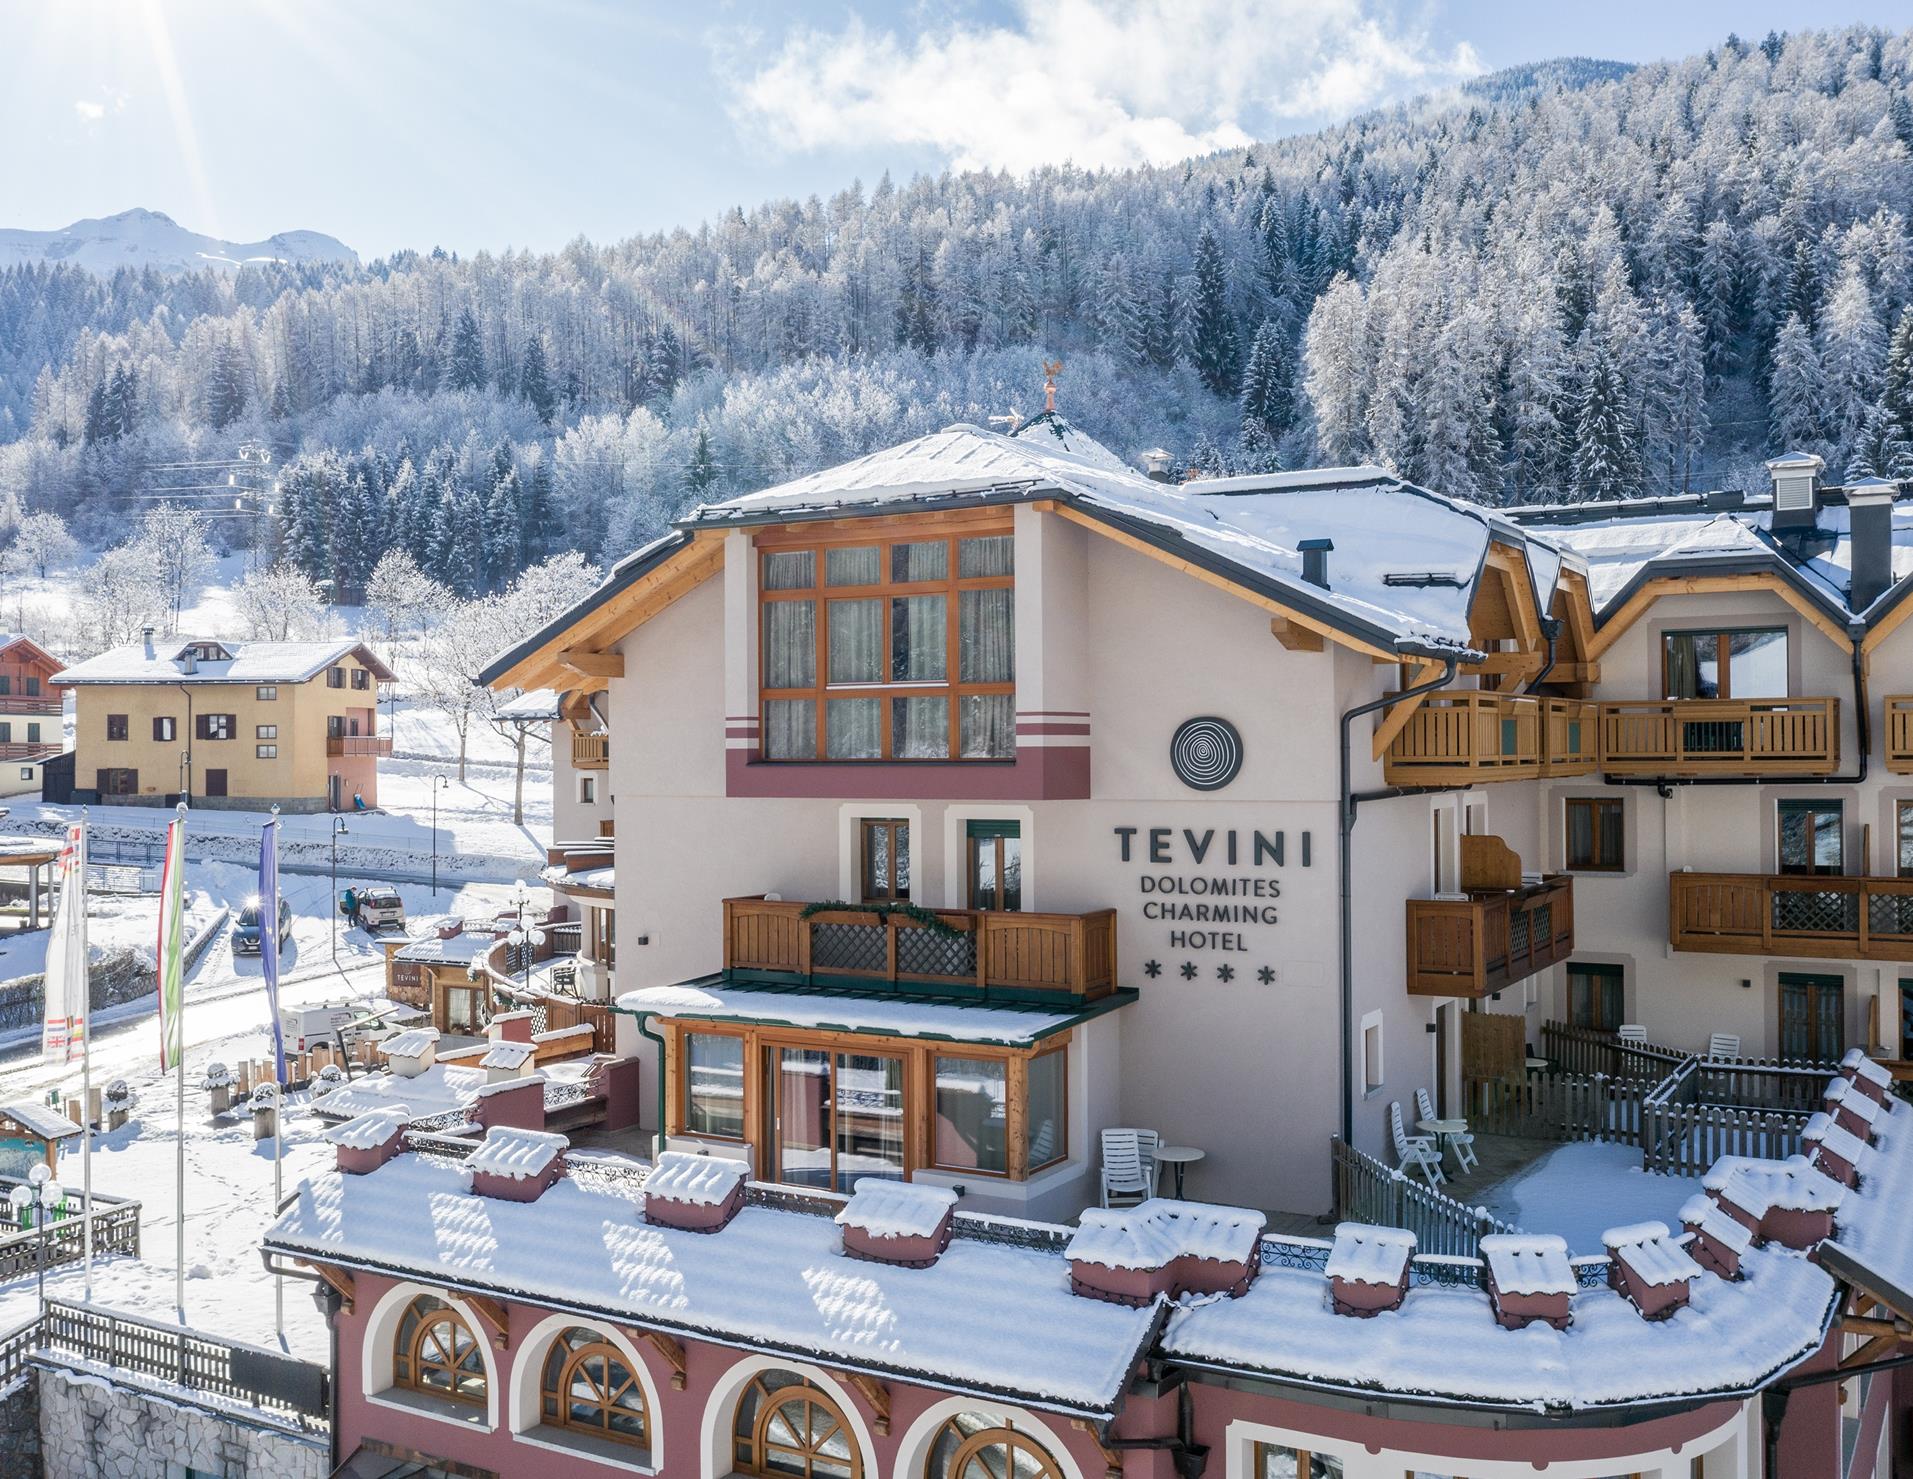 Tevini Dolomites Charming Hotel - Exterior parking places